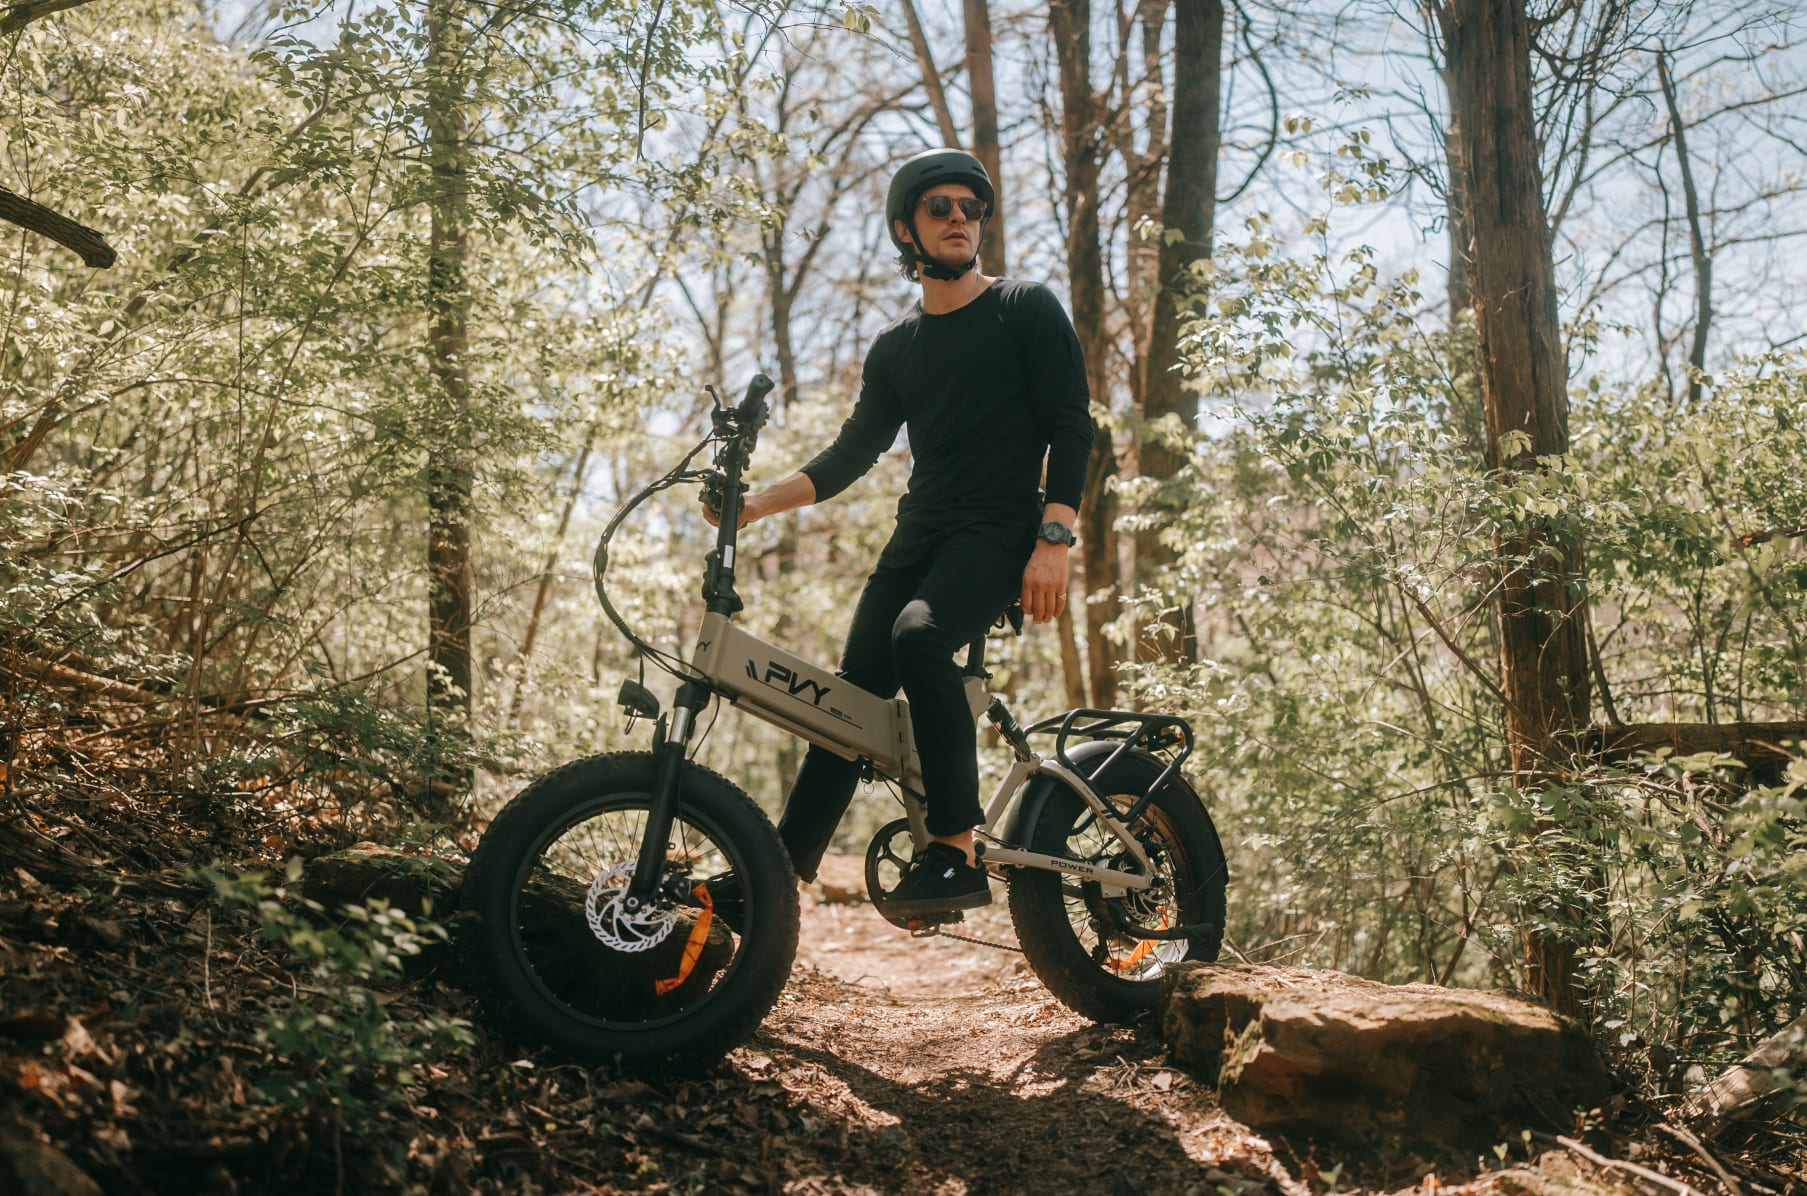 Tube Mate X Video - PVY Z20 PLUS -The Ultimate All-Terrain E-Bike | Indiegogo